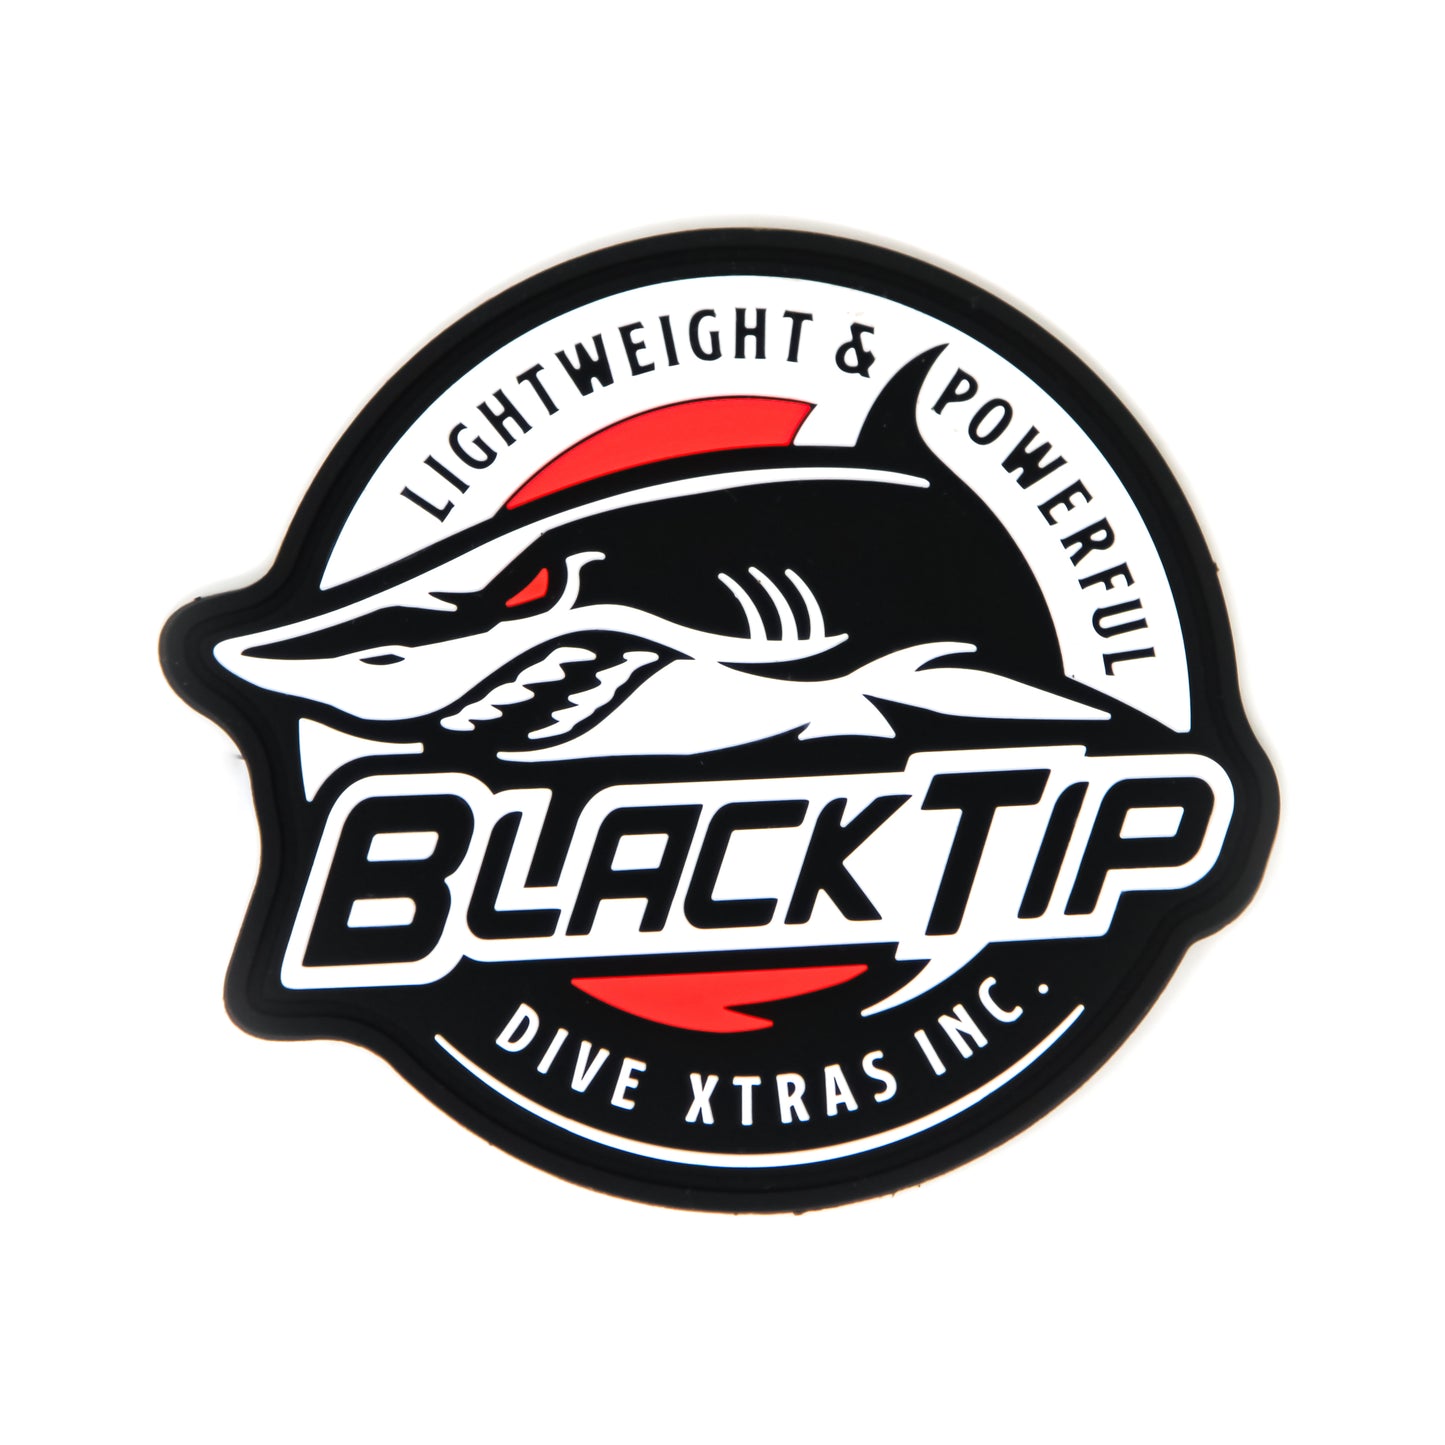 BlackTip Logo Patch